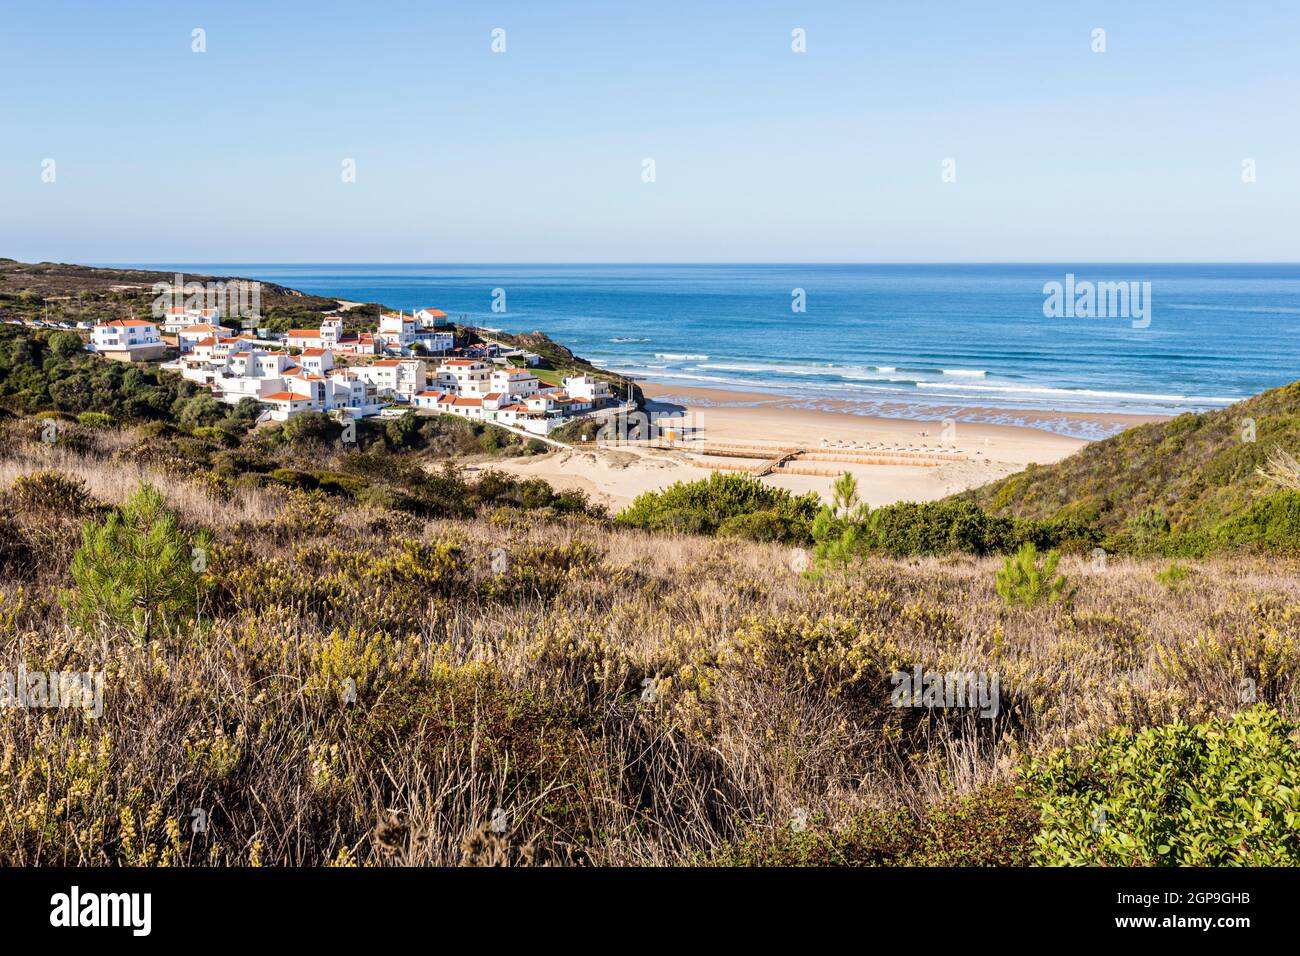 Odeceixe mit Strand und Atlantischer Ozean, Algarve, Portugal, Odeceixe with beach and Atlantic, Algarve, Portugal Stock Photo